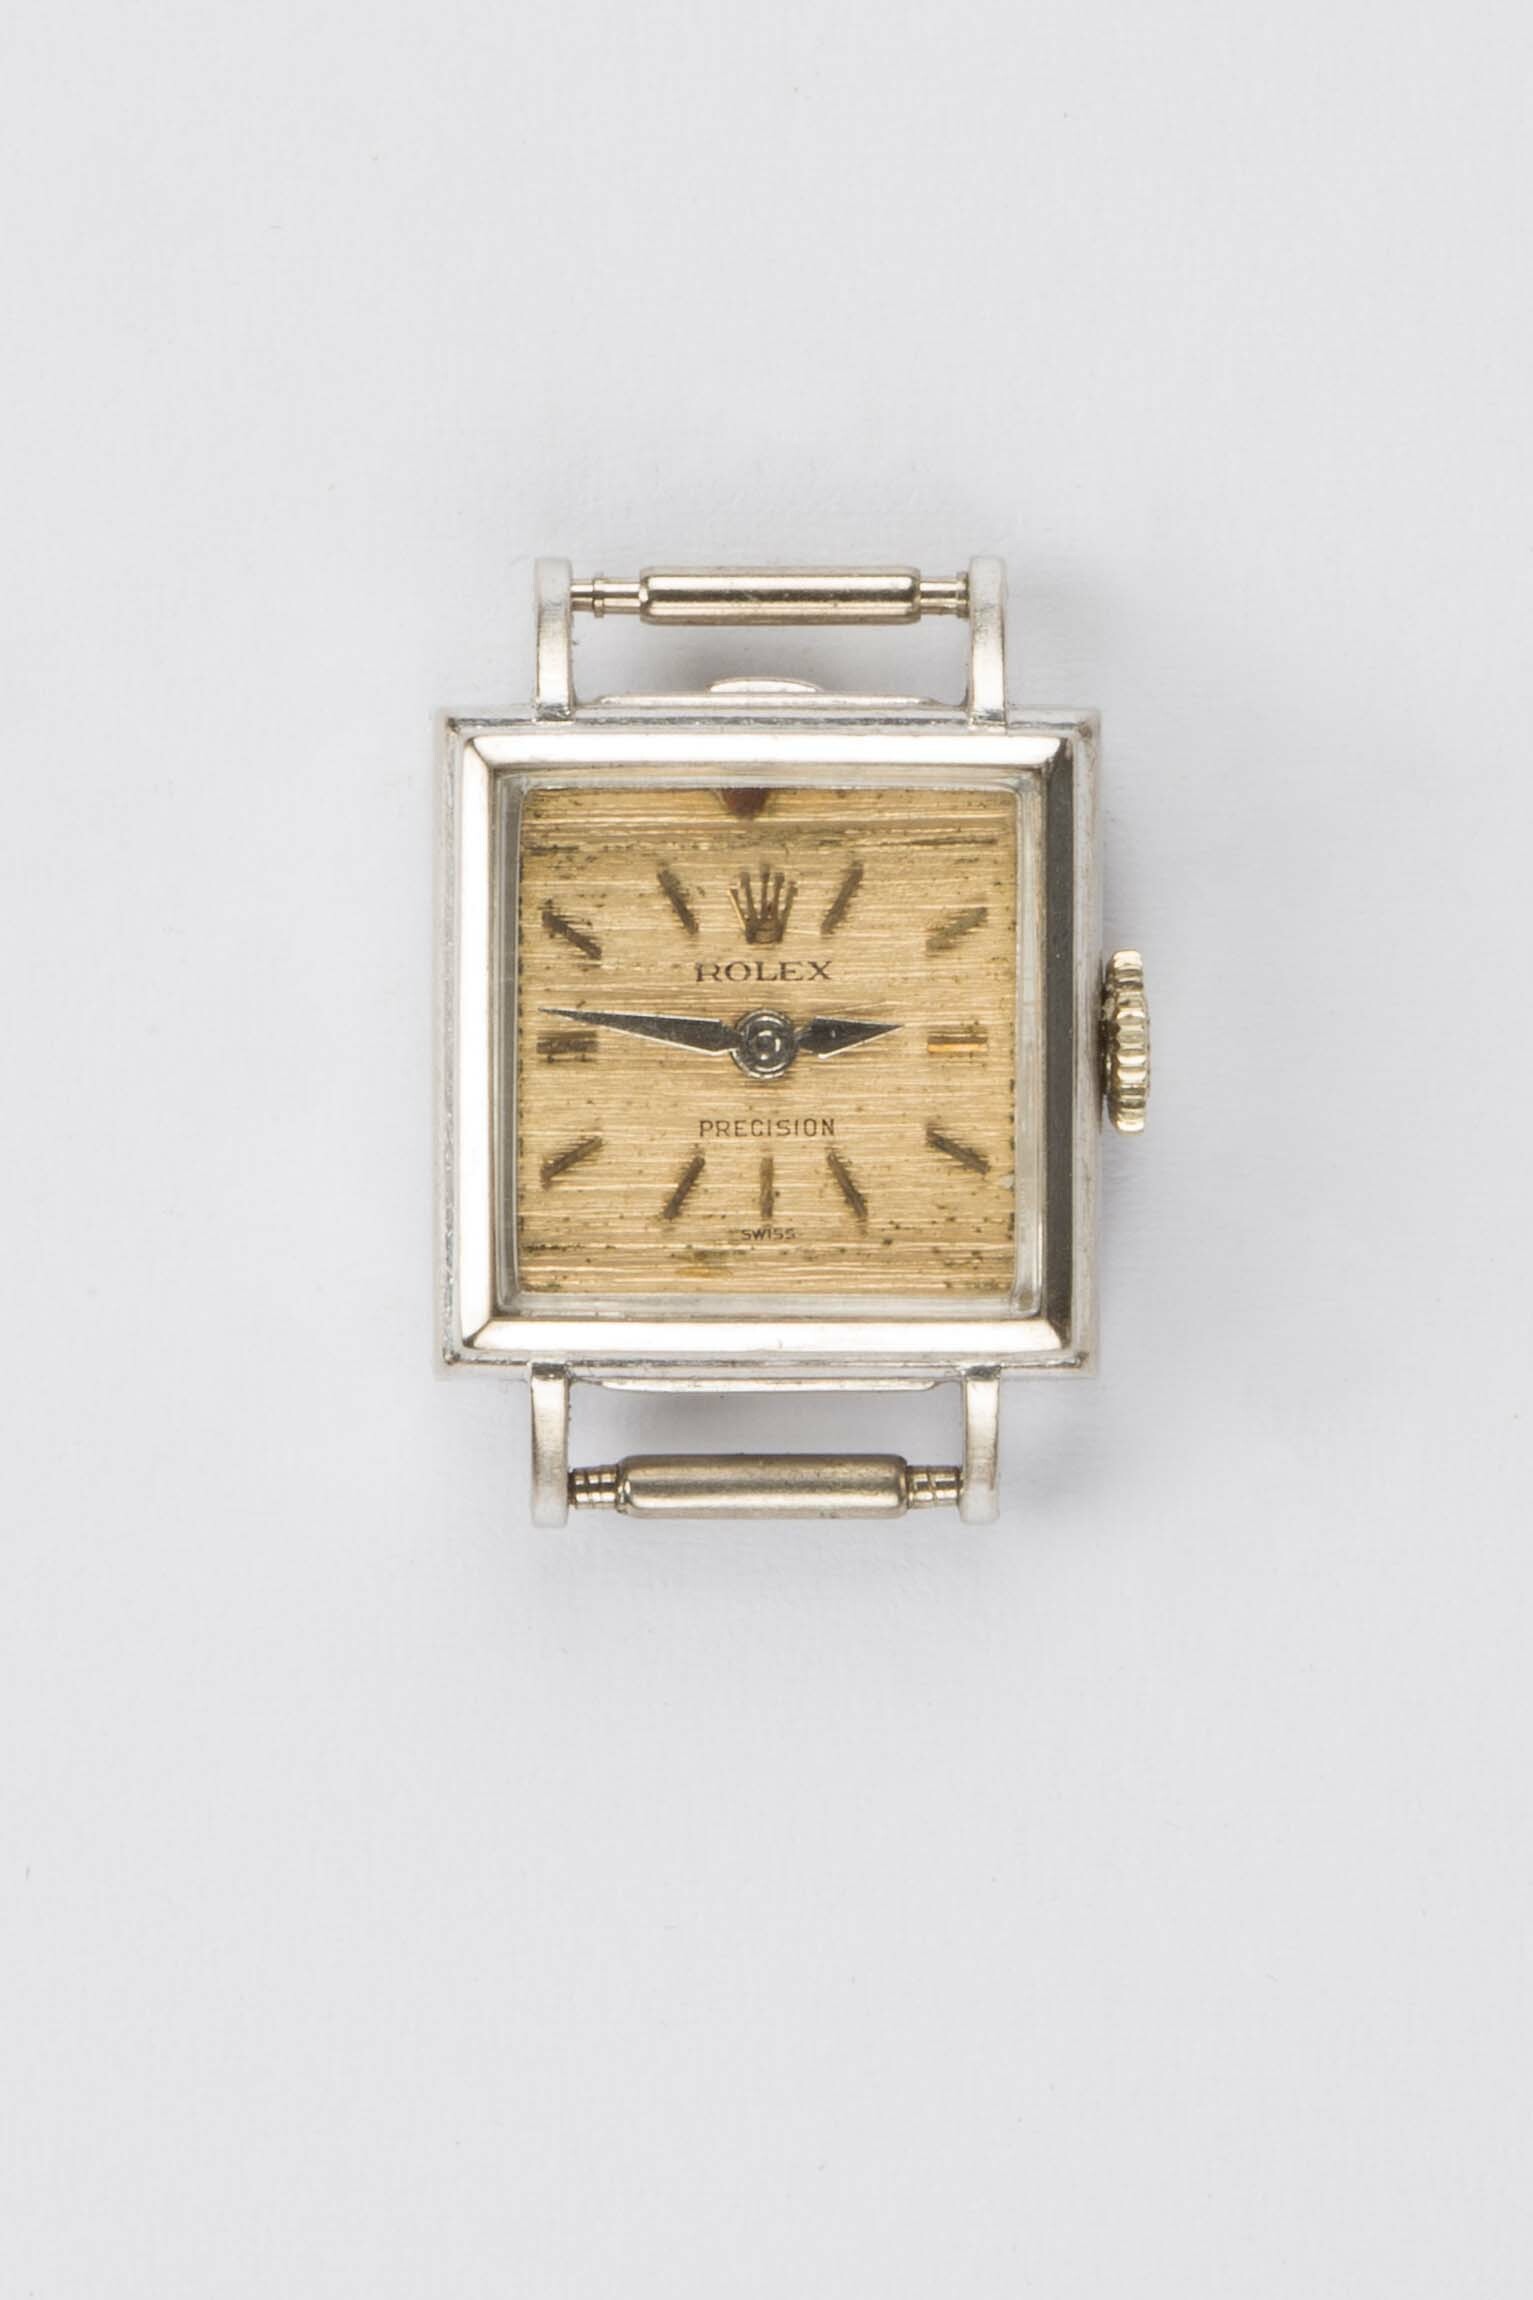 Armbanduhr Rolex Precision, Genf, um 1960 (Deutsches Uhrenmuseum CC BY-SA)